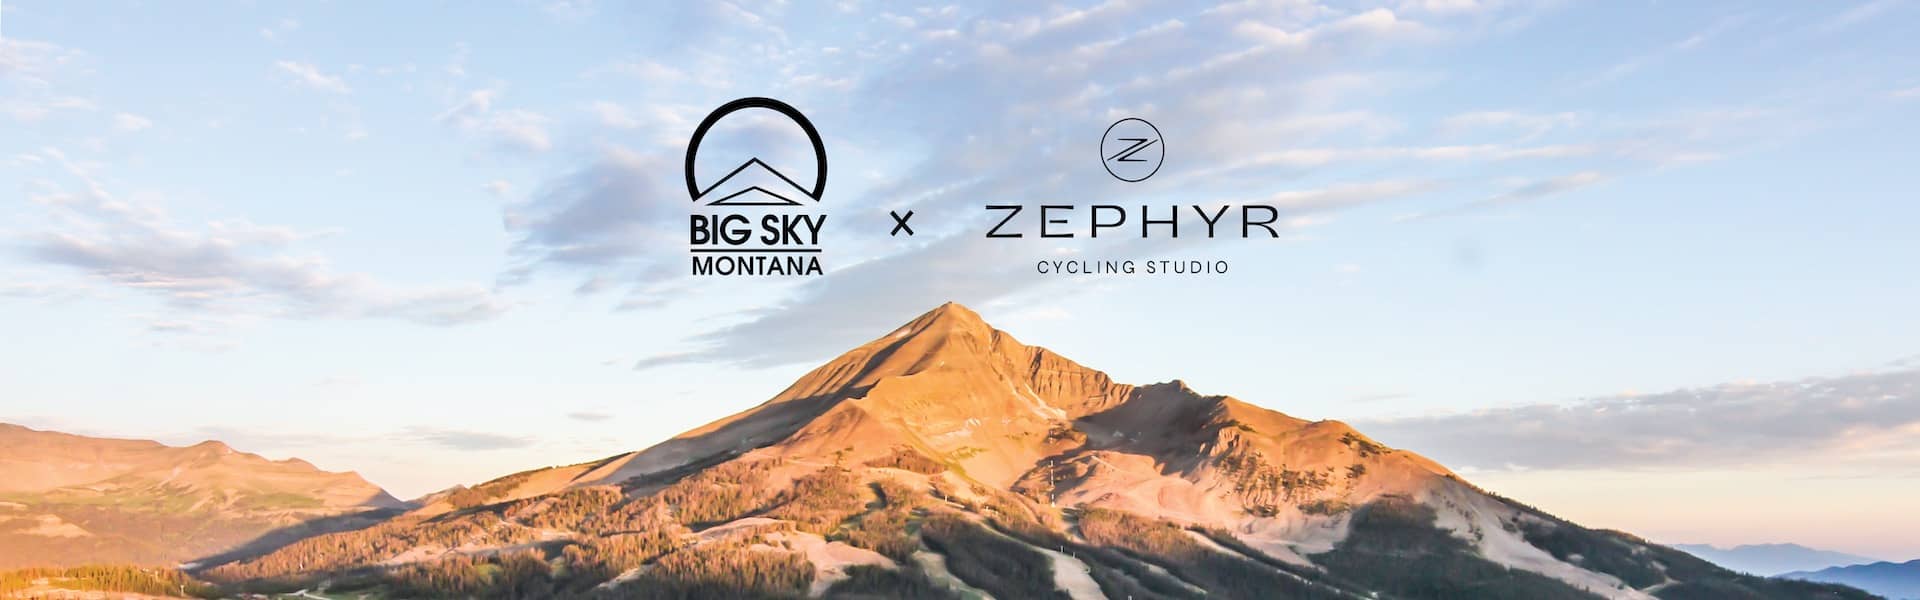 Big Sky Resort x Zephyr Cycling